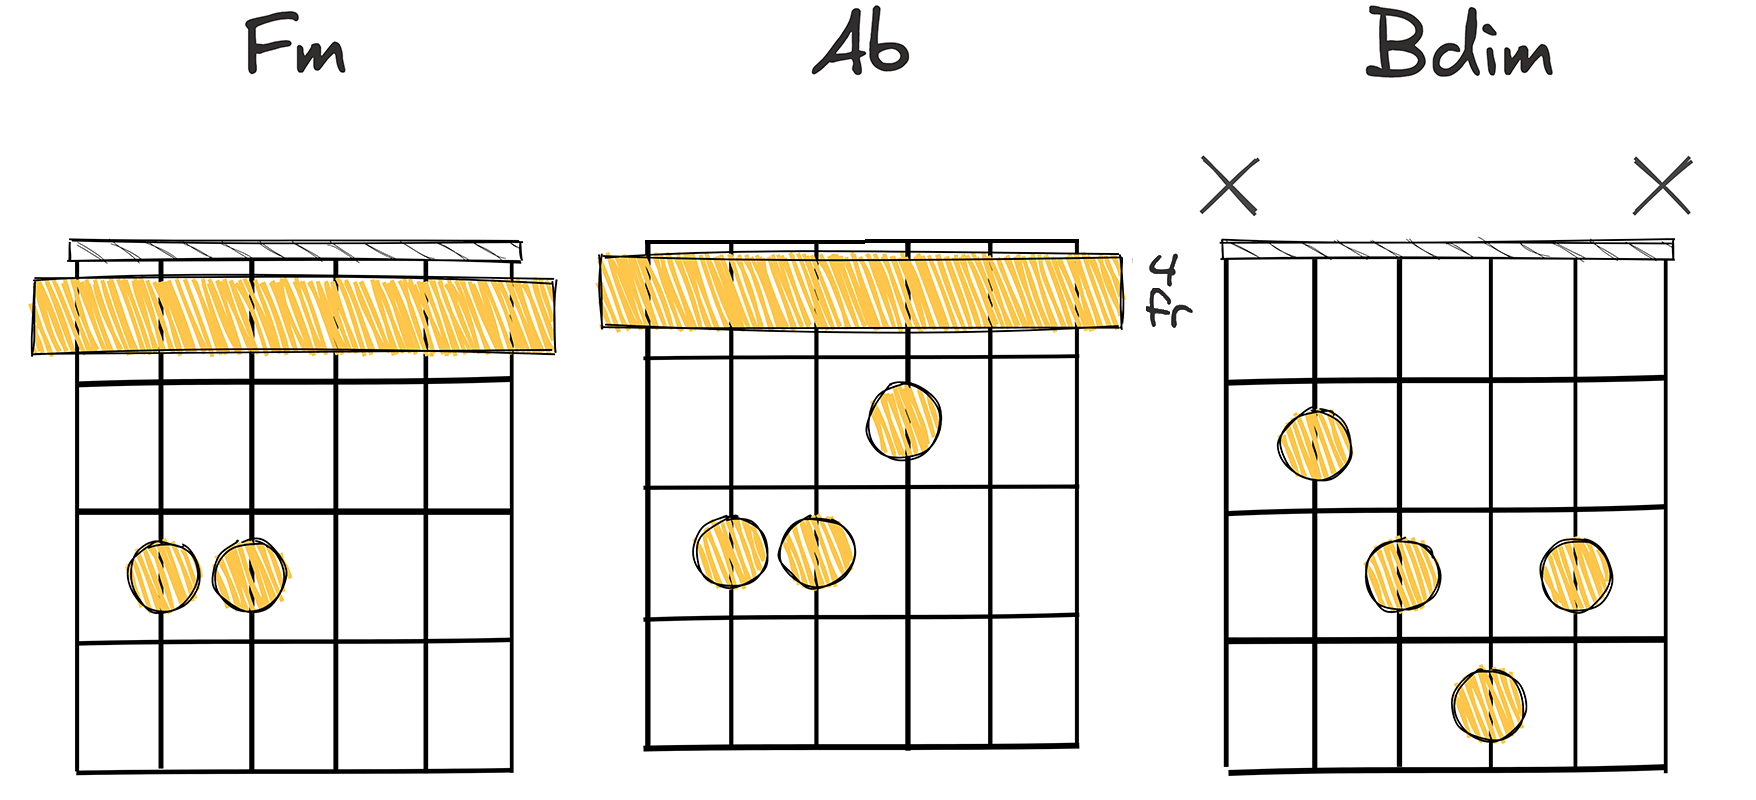 iv - VI - vii°  (4-6-7) chords diagram